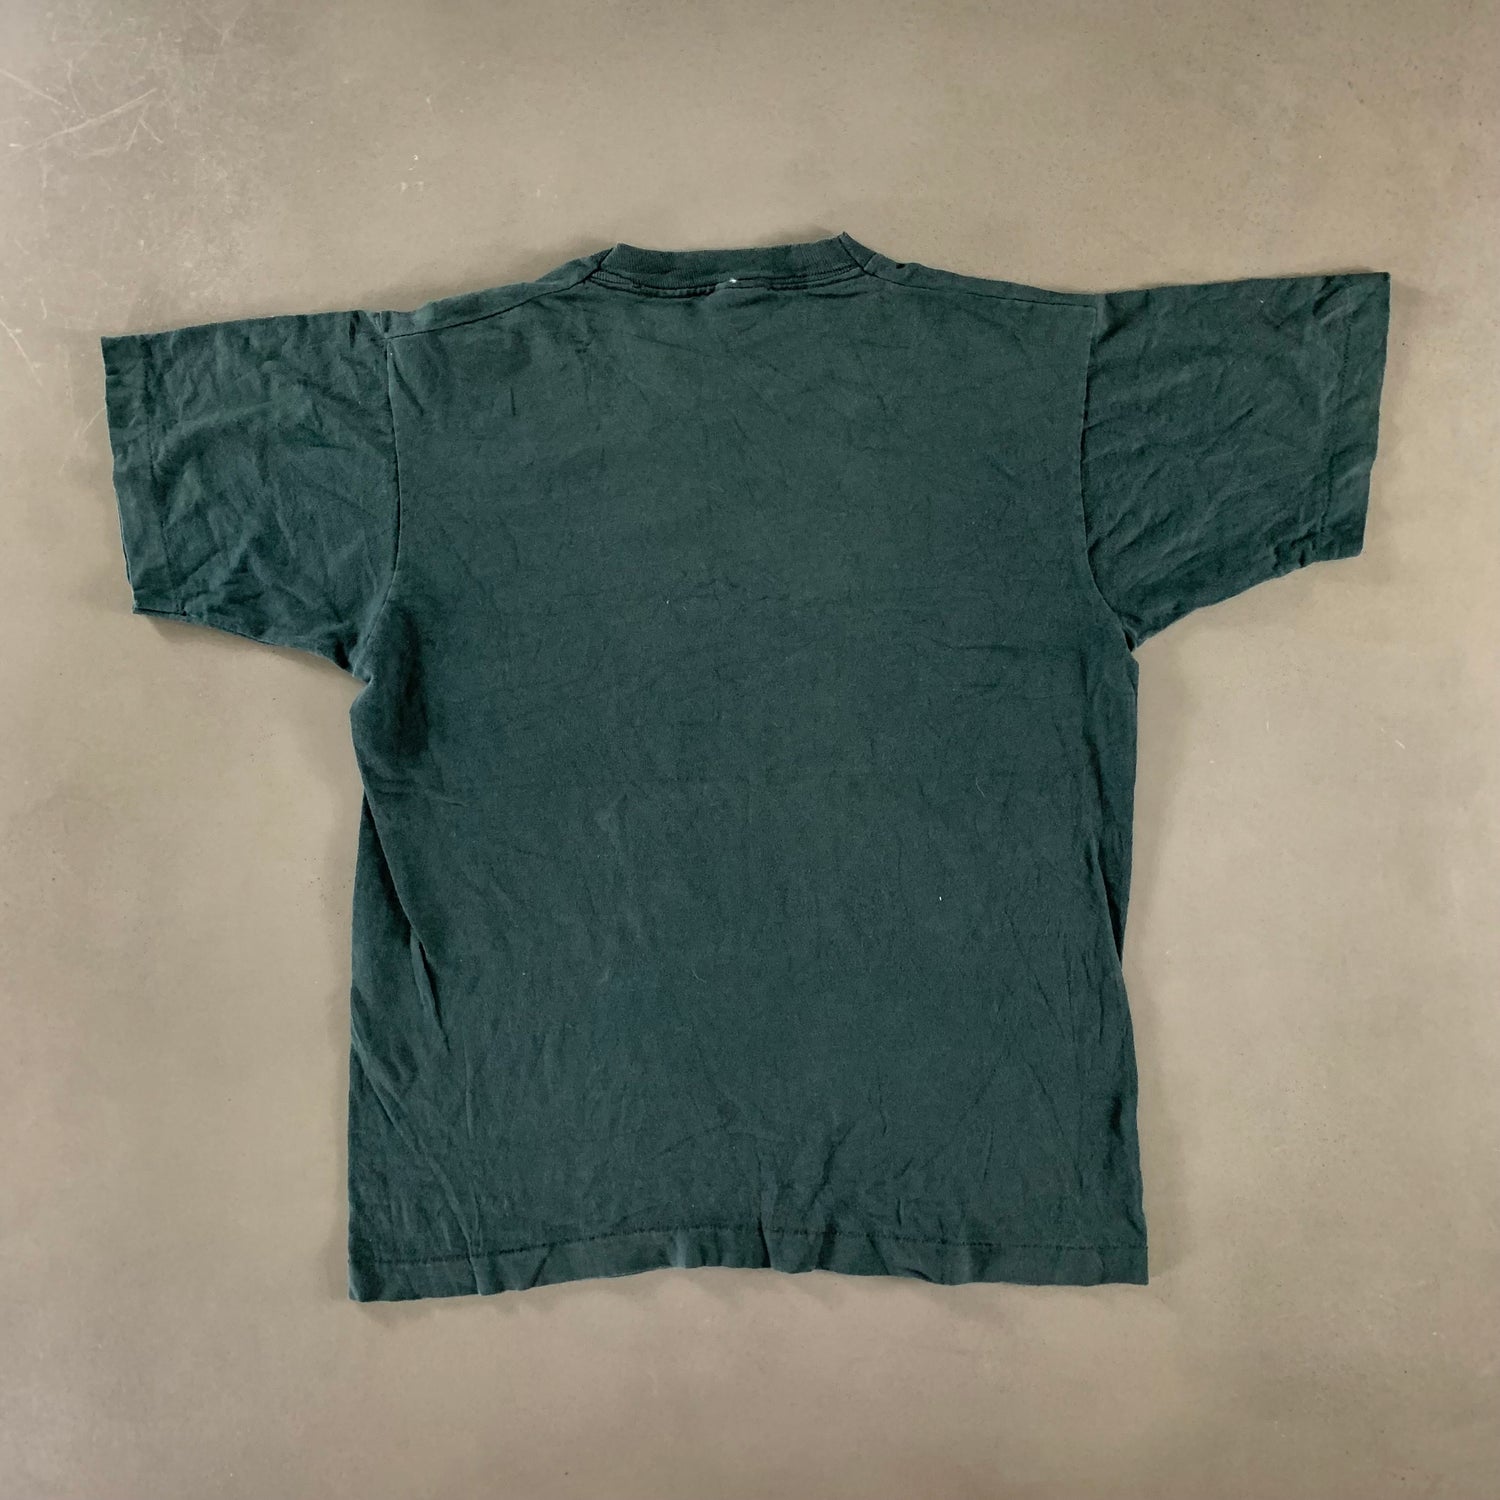 Vintage 1990s Margaritaville T-shirt size Medium